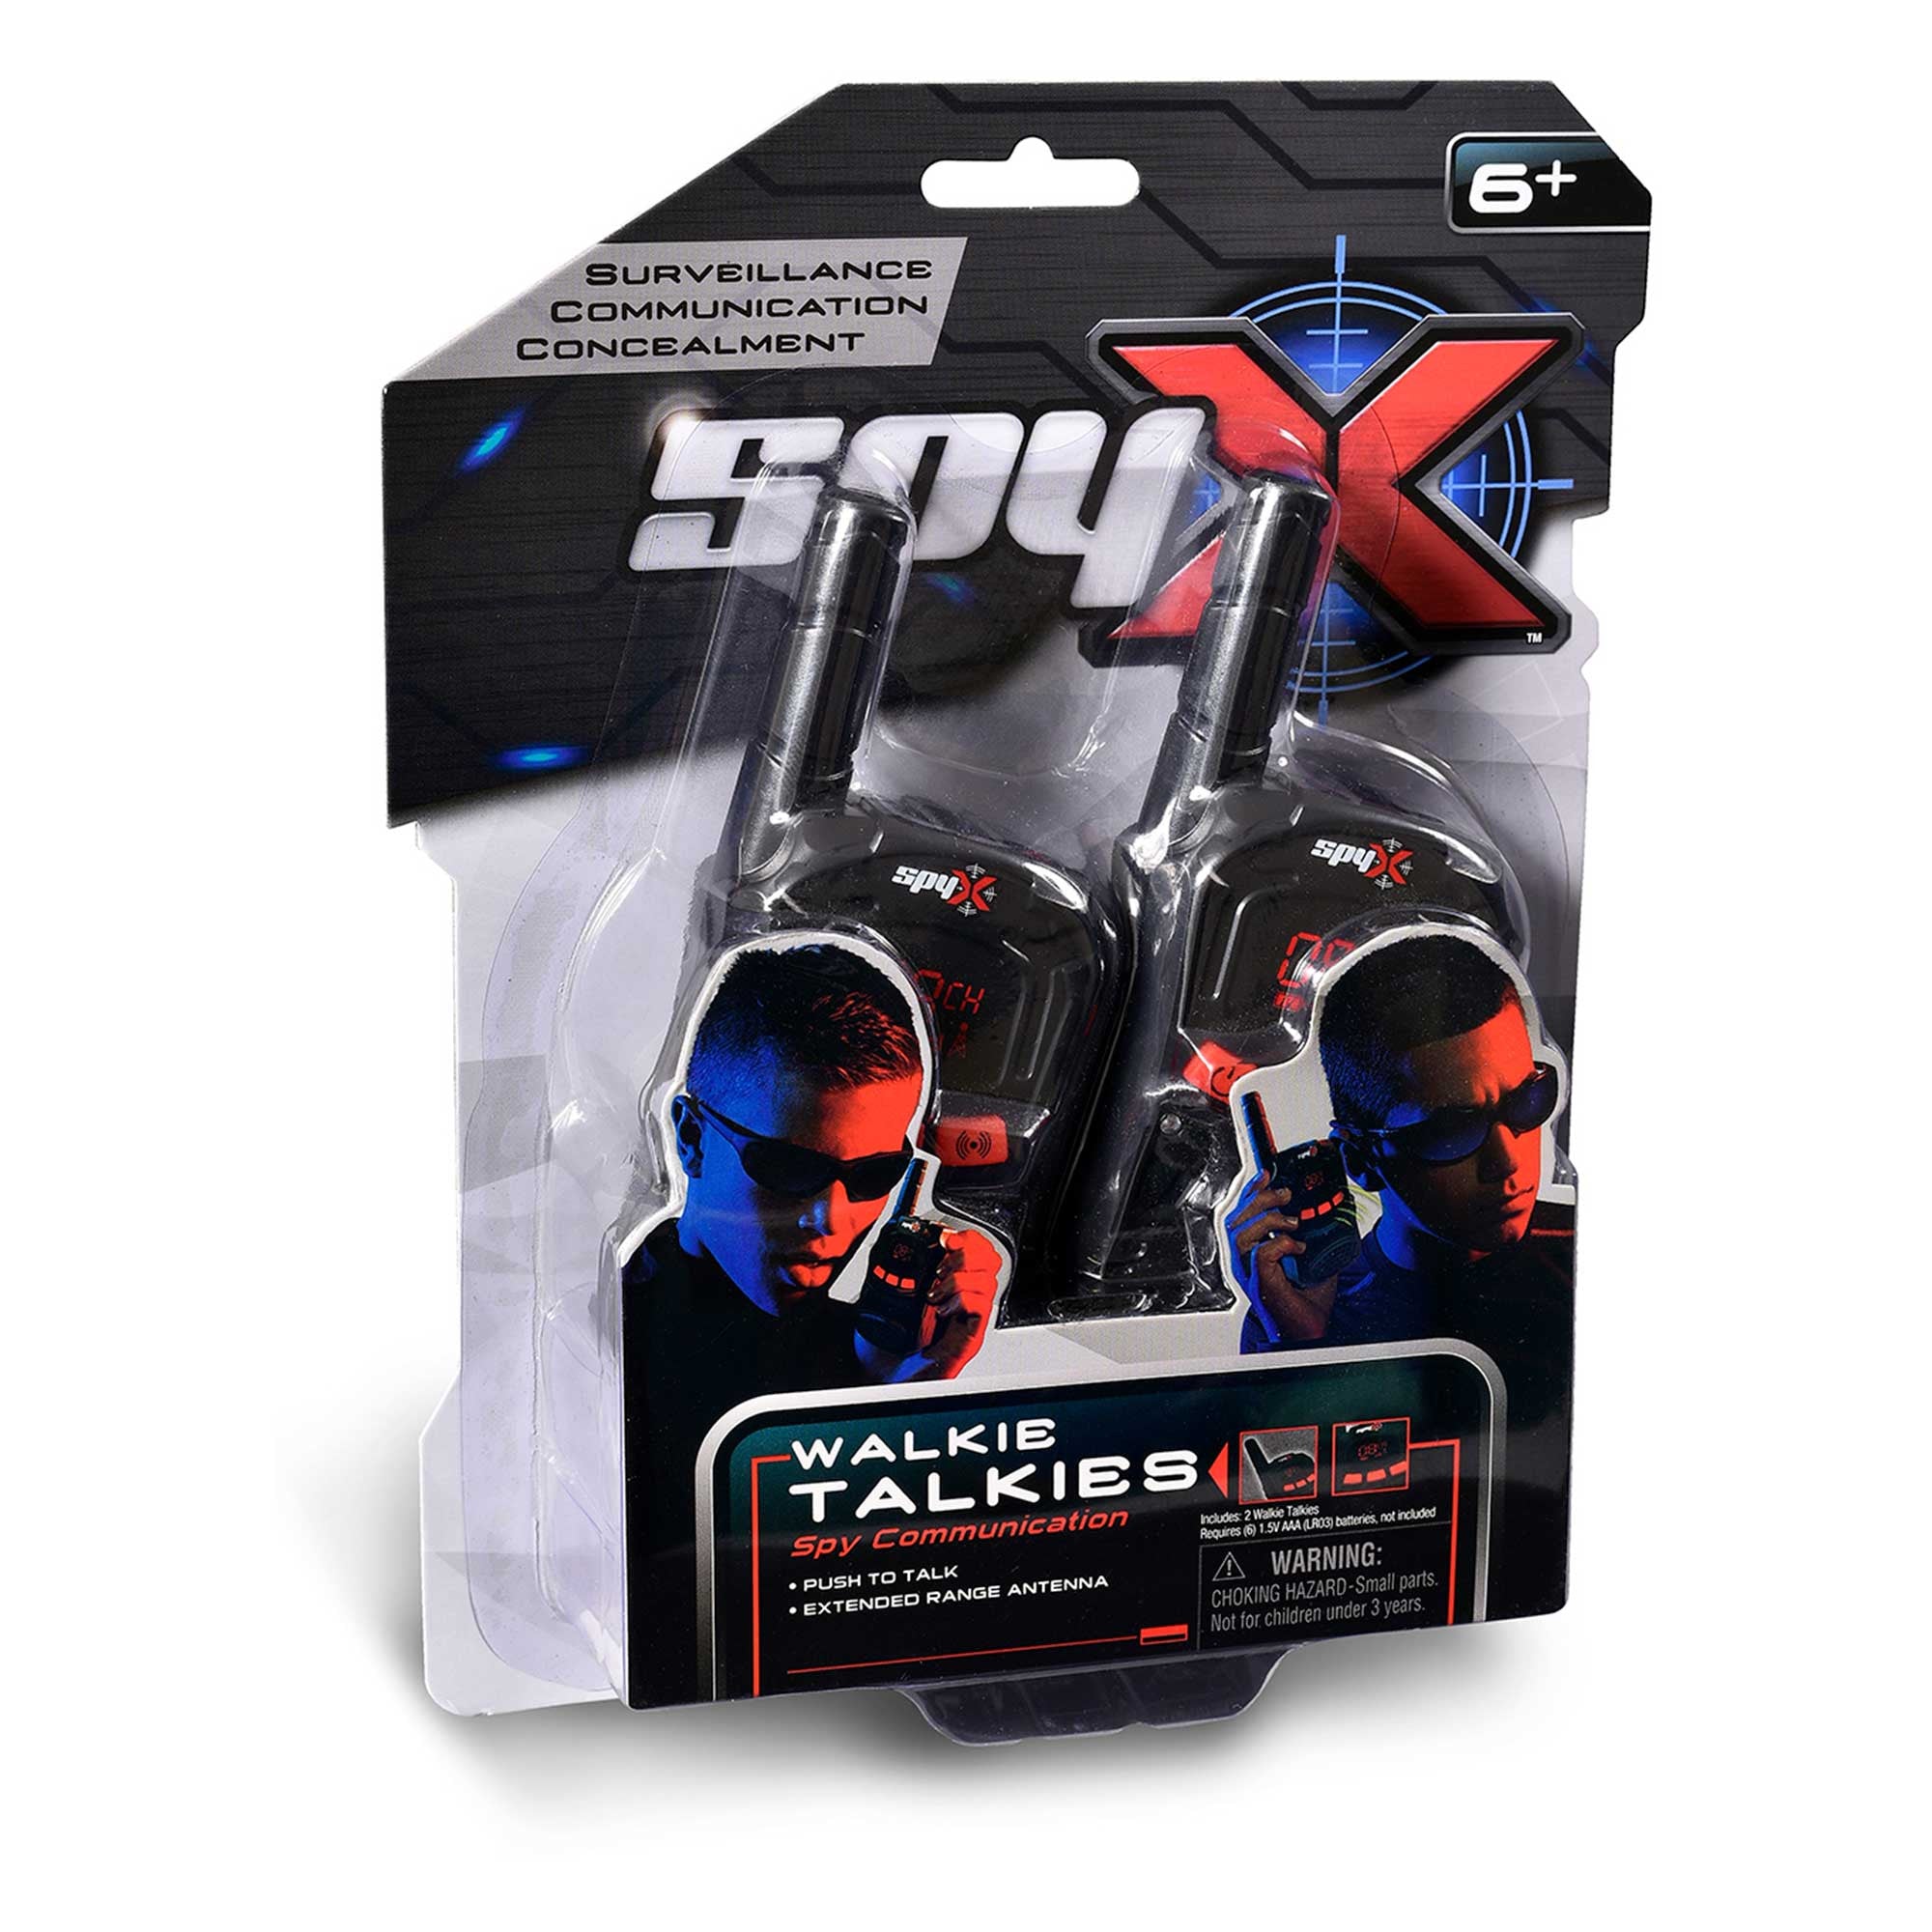 SpyX Walkie Talkies requires 6 AAA batteries